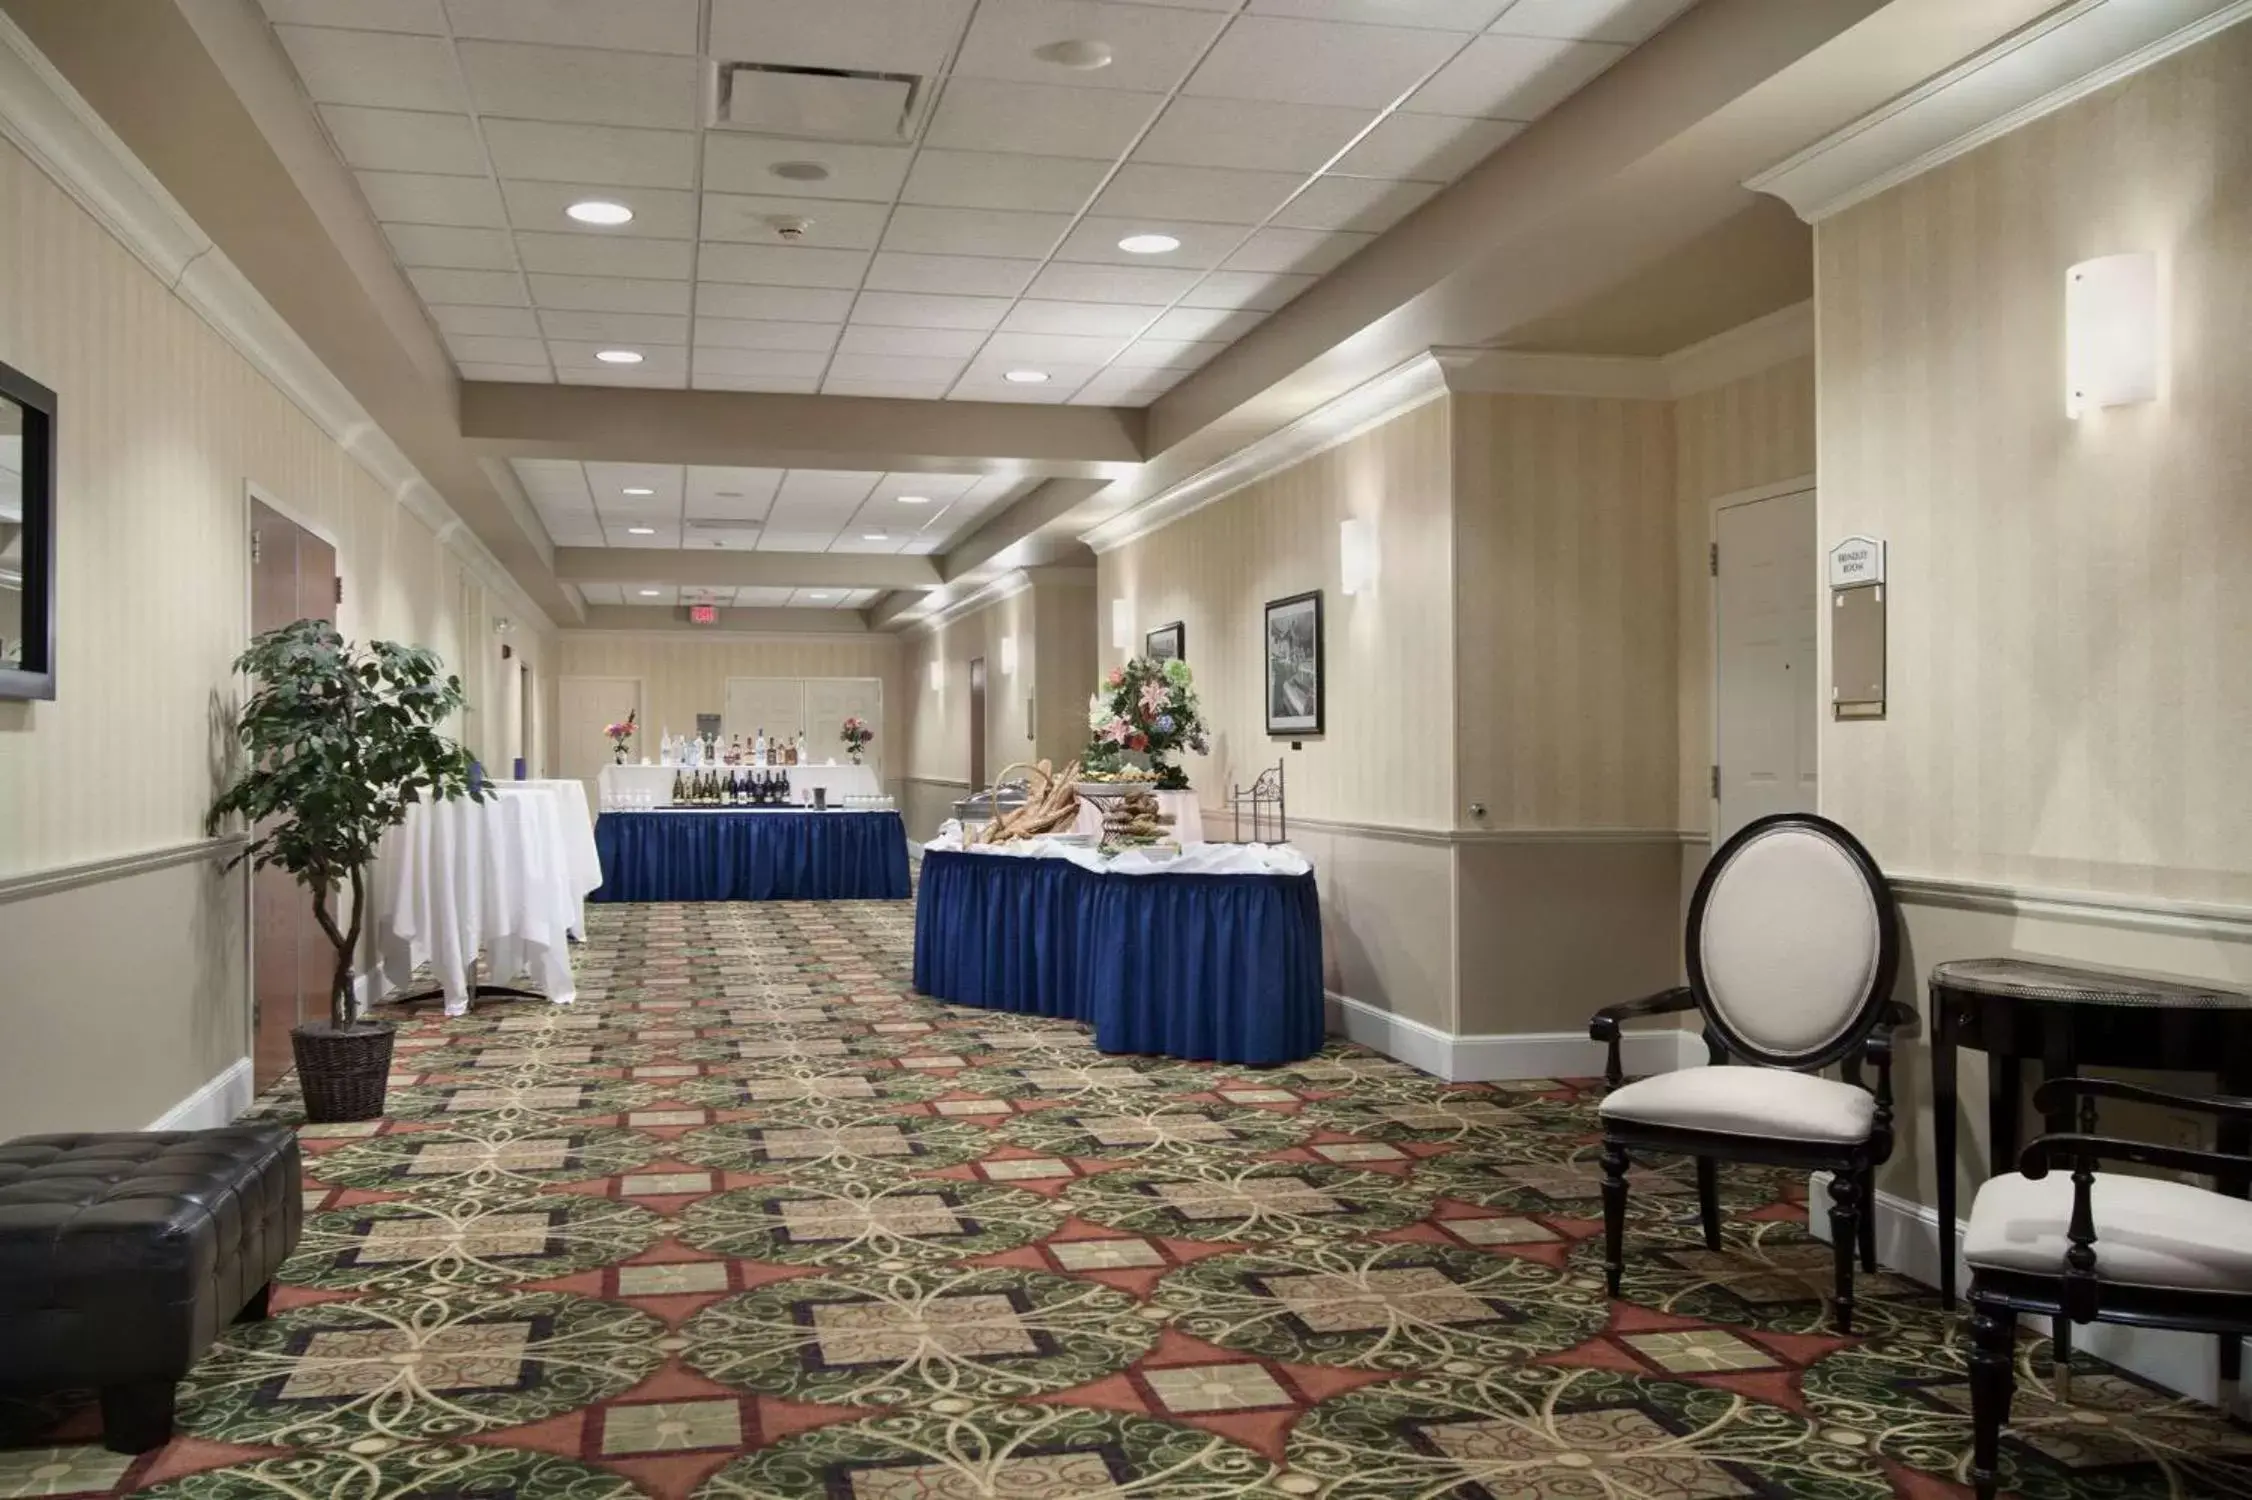 Meeting/conference room, Banquet Facilities in Hilton Garden Inn Ithaca